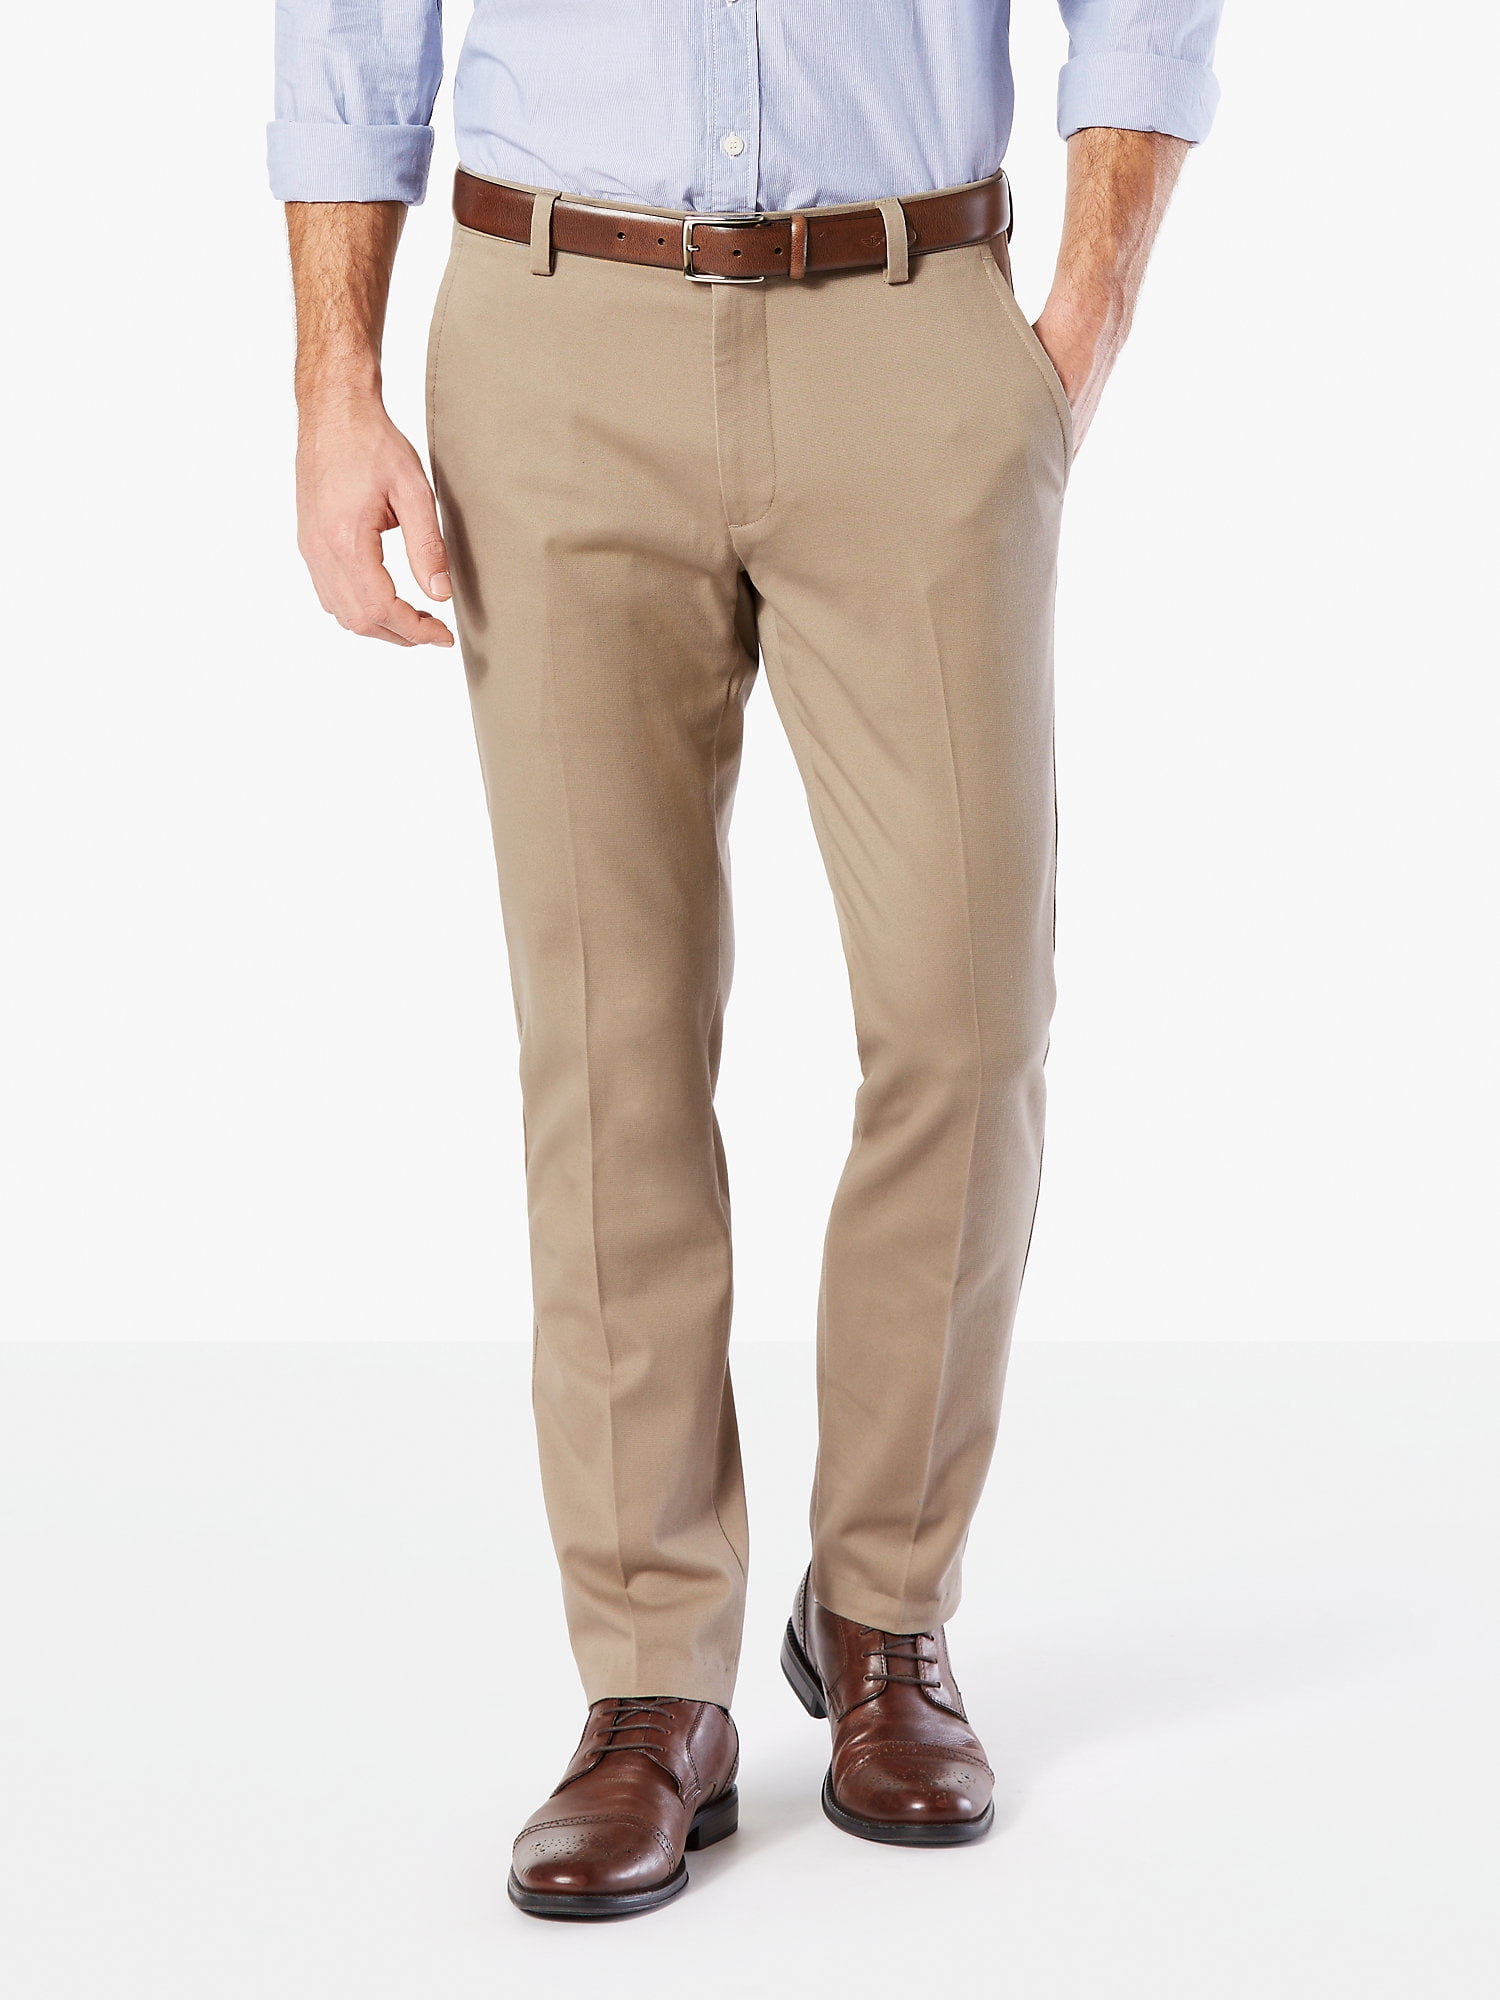 DOCKERS Signature The Best Pressed Khaki Pants Slim Fit Stretch No Wrinkle  Khaki | eBay